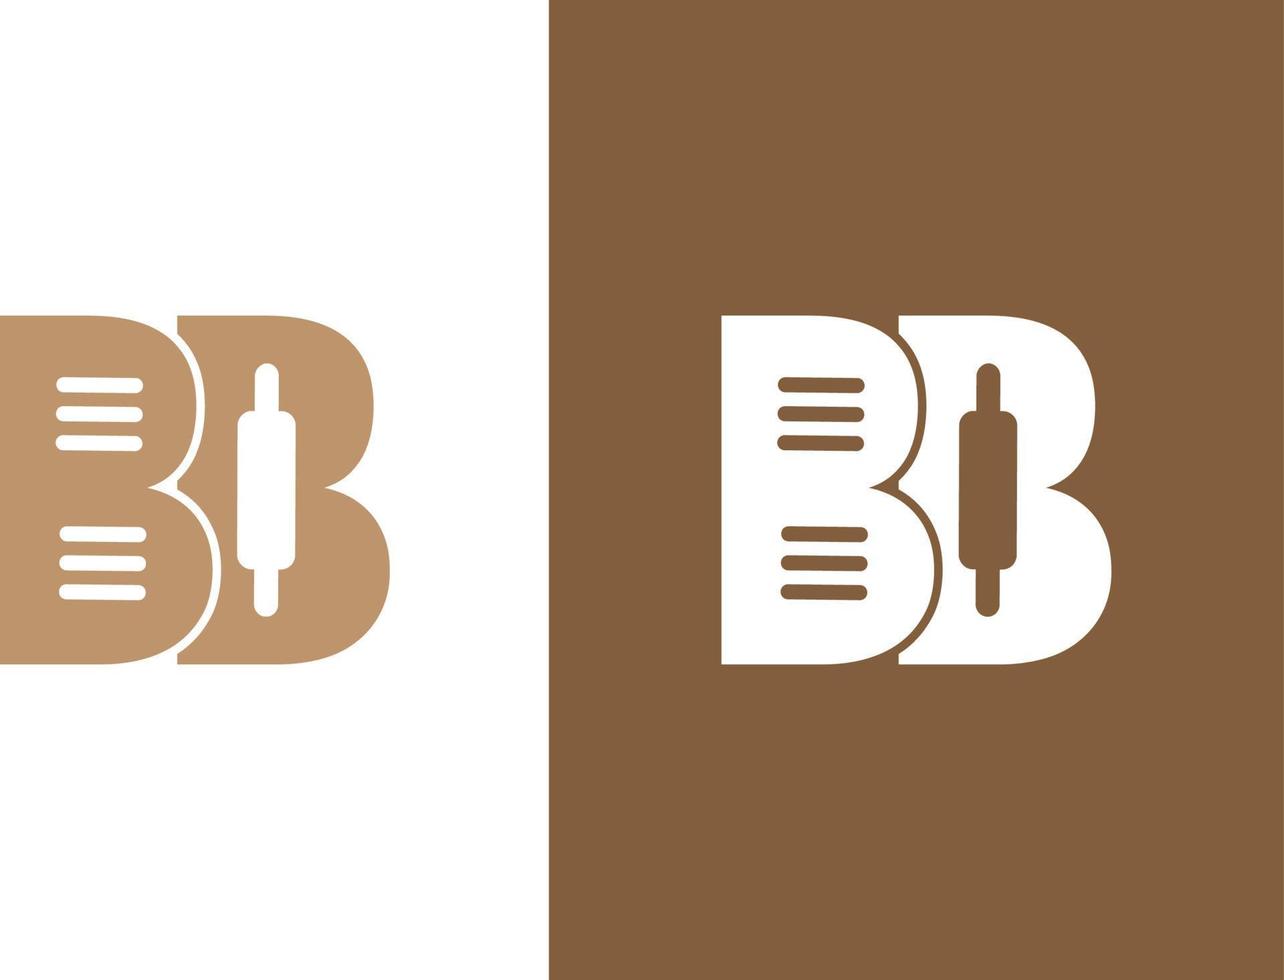 design de logotipo de padaria bb vetor